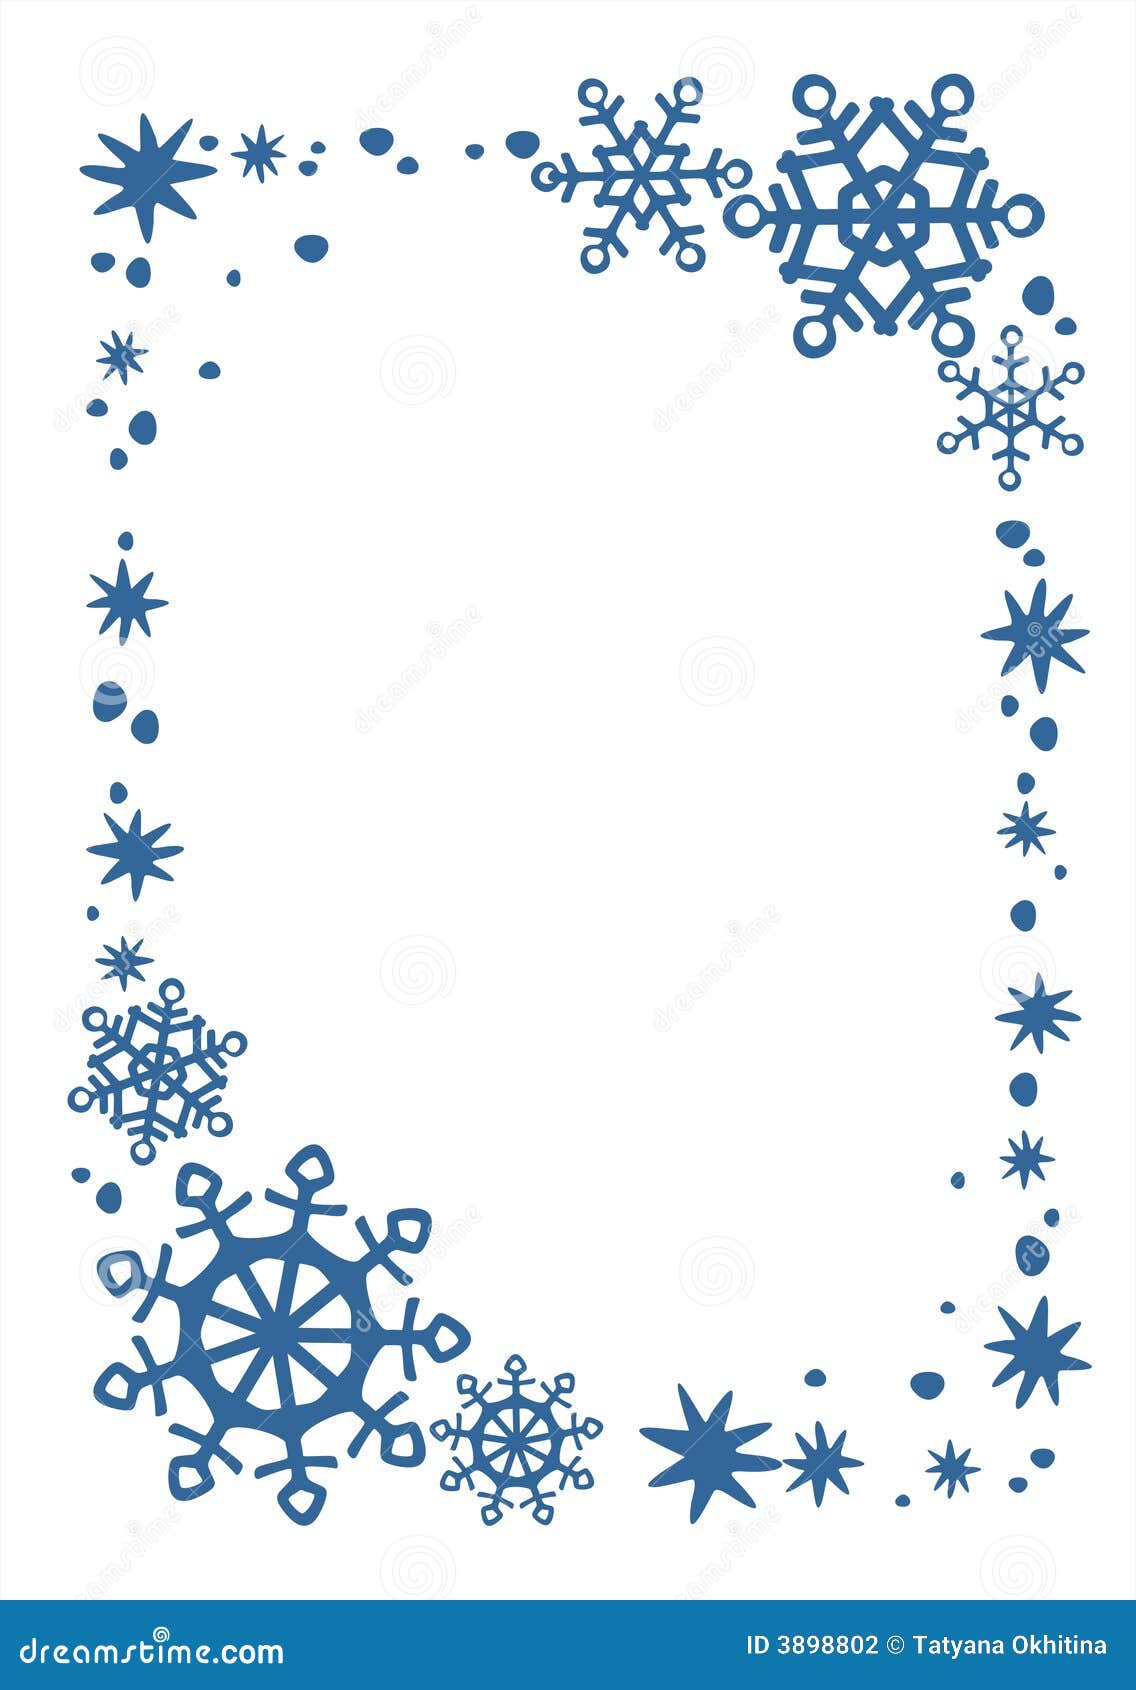 Blue Snow And Stars Border Vector Illustration | CartoonDealer.com #3898802